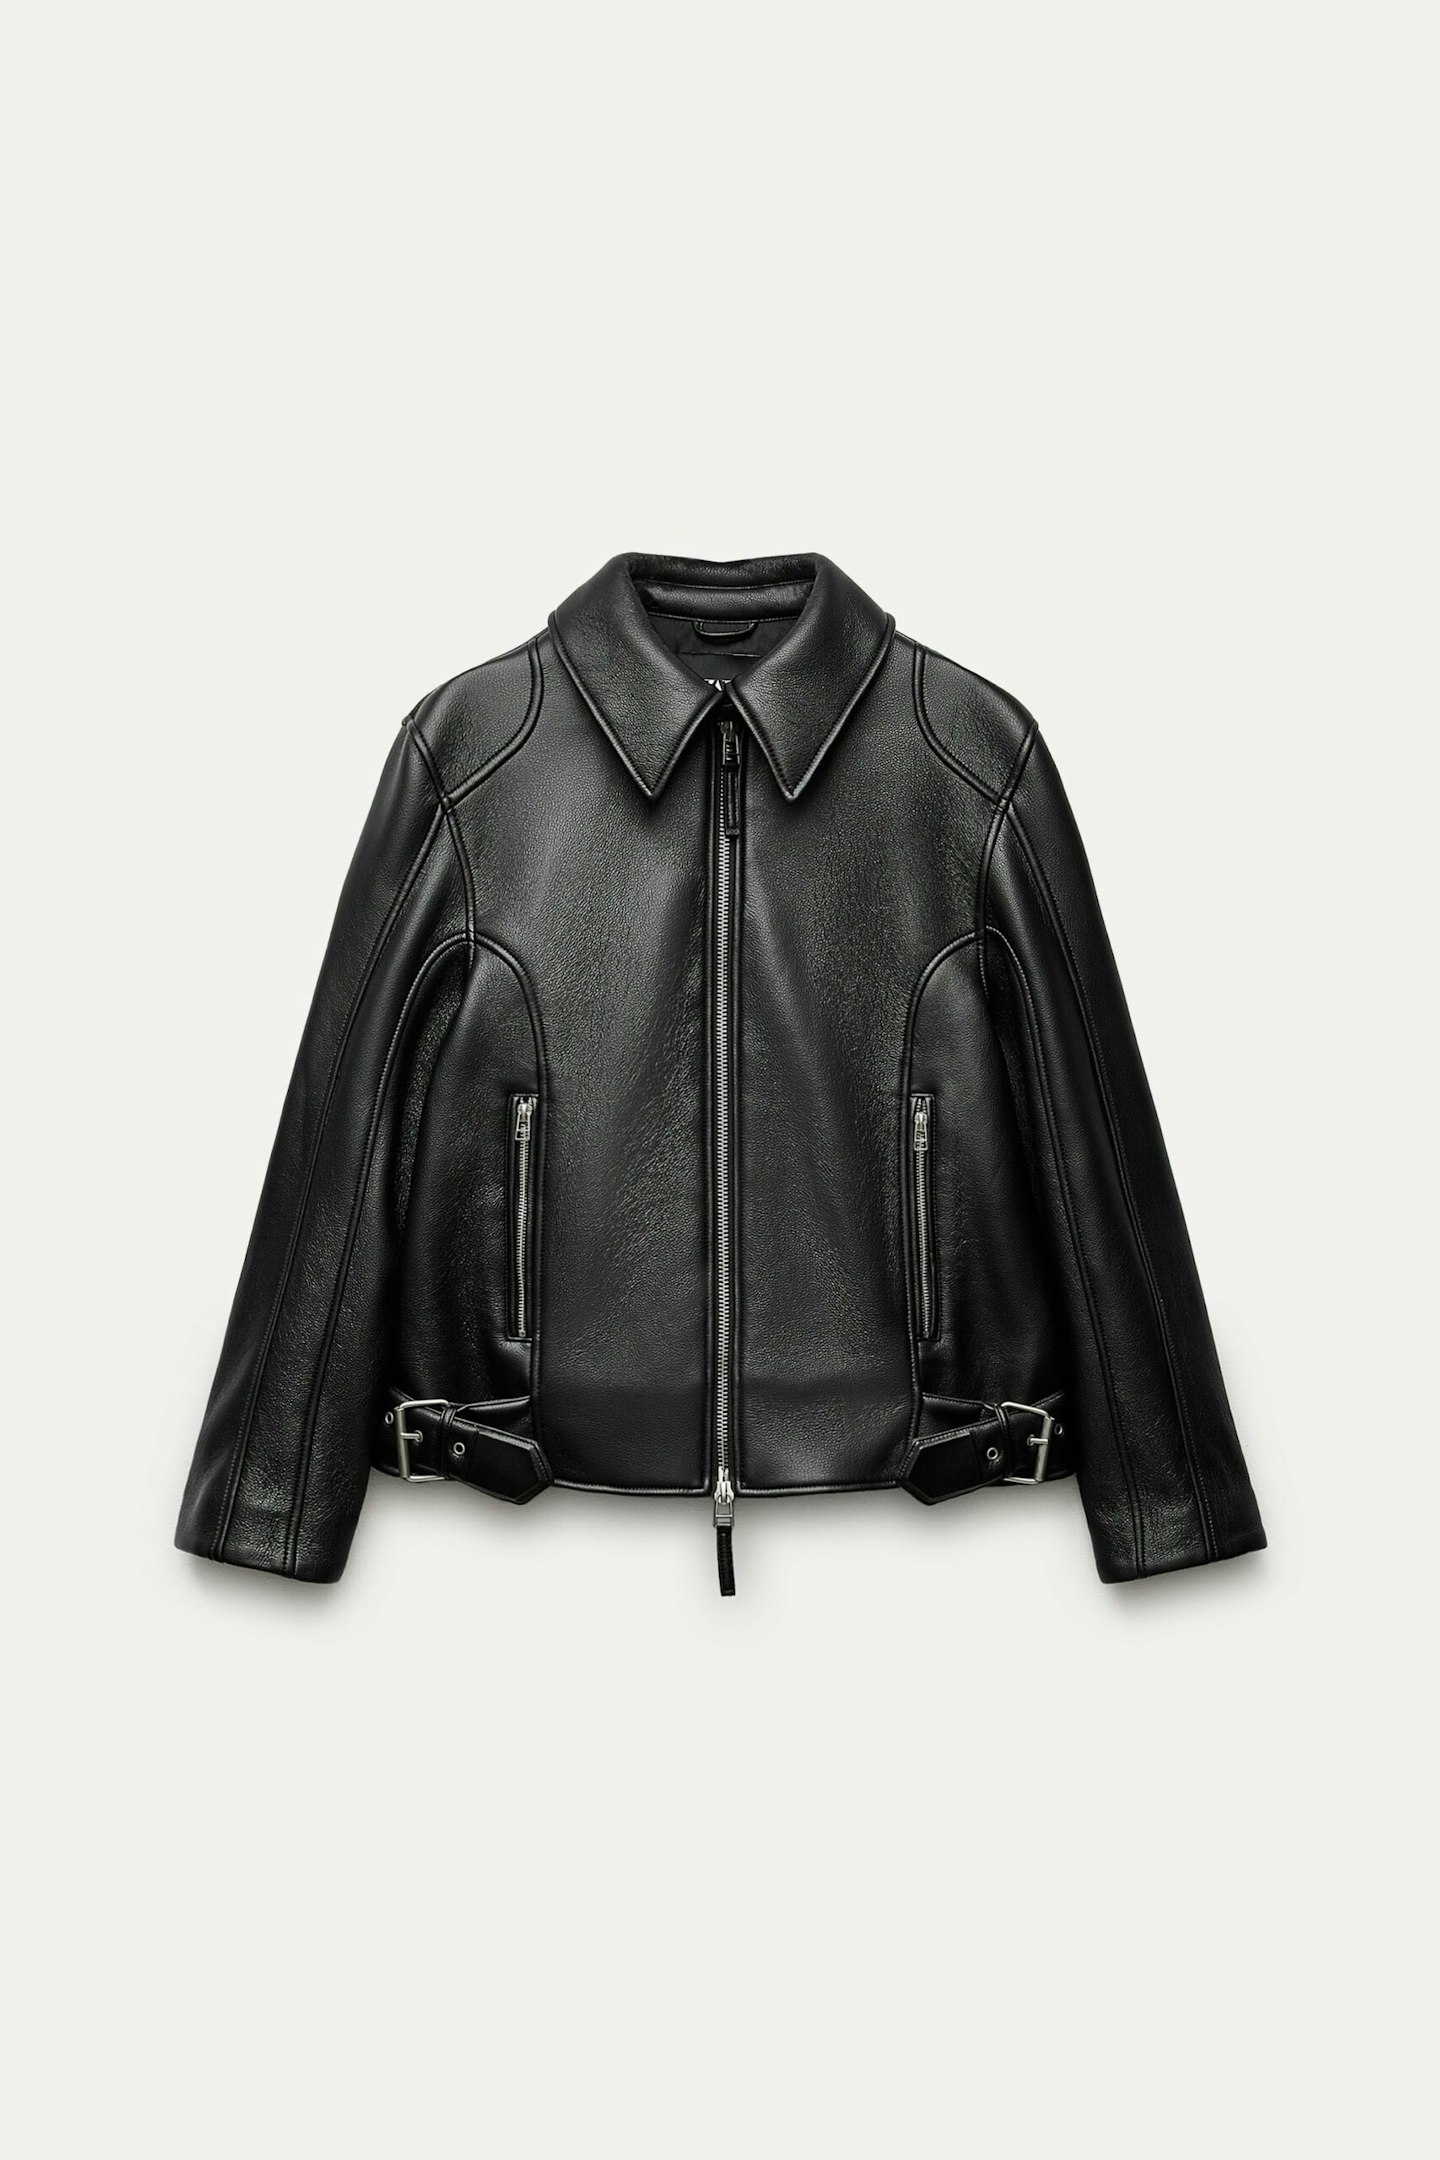 Zara, Leather-Effect Jacket